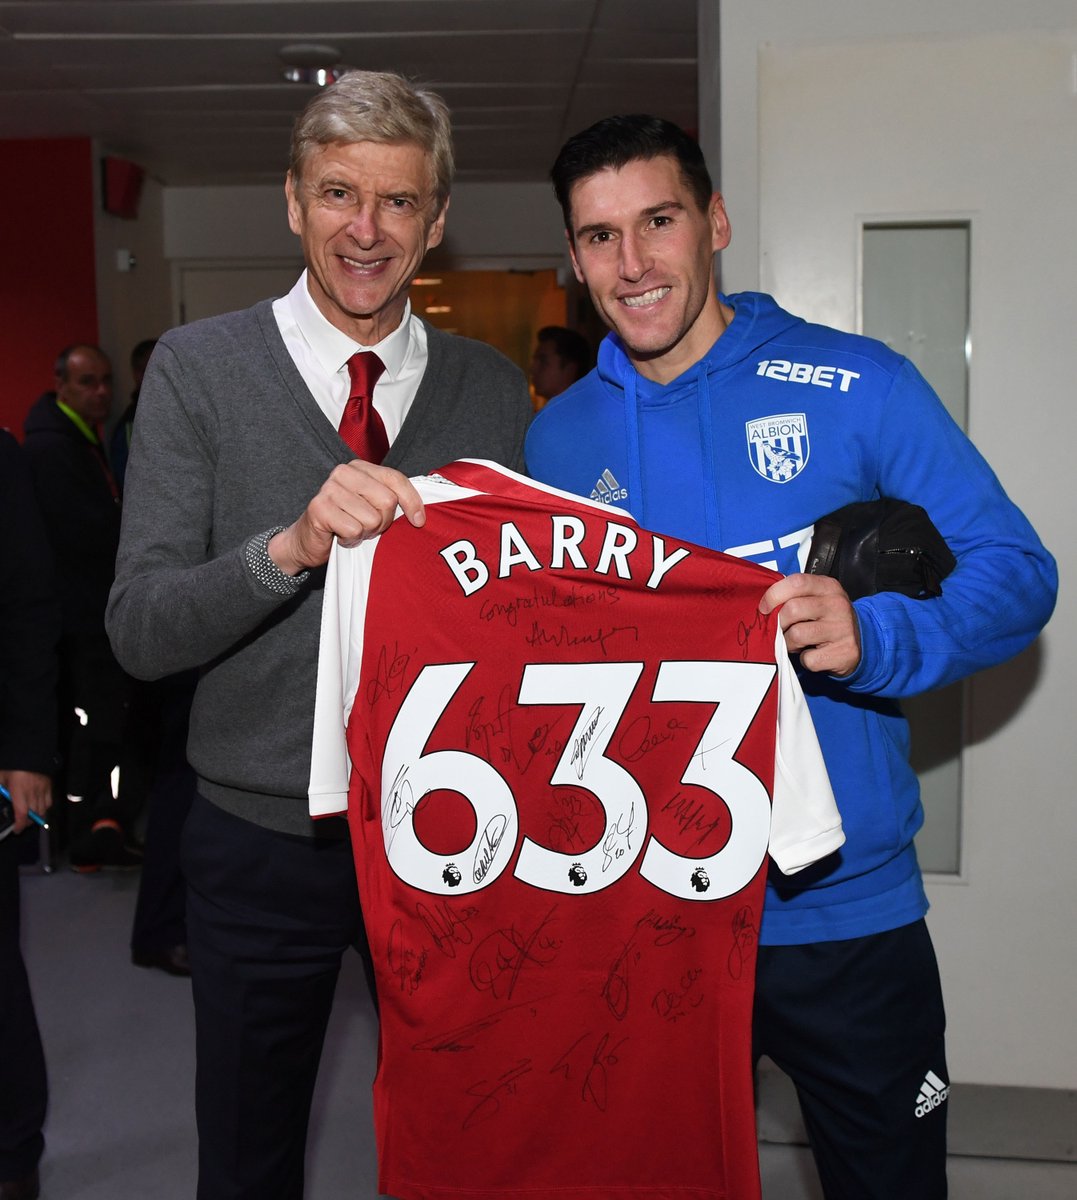 Gareth Barry 633 Signed Kit Arsenal